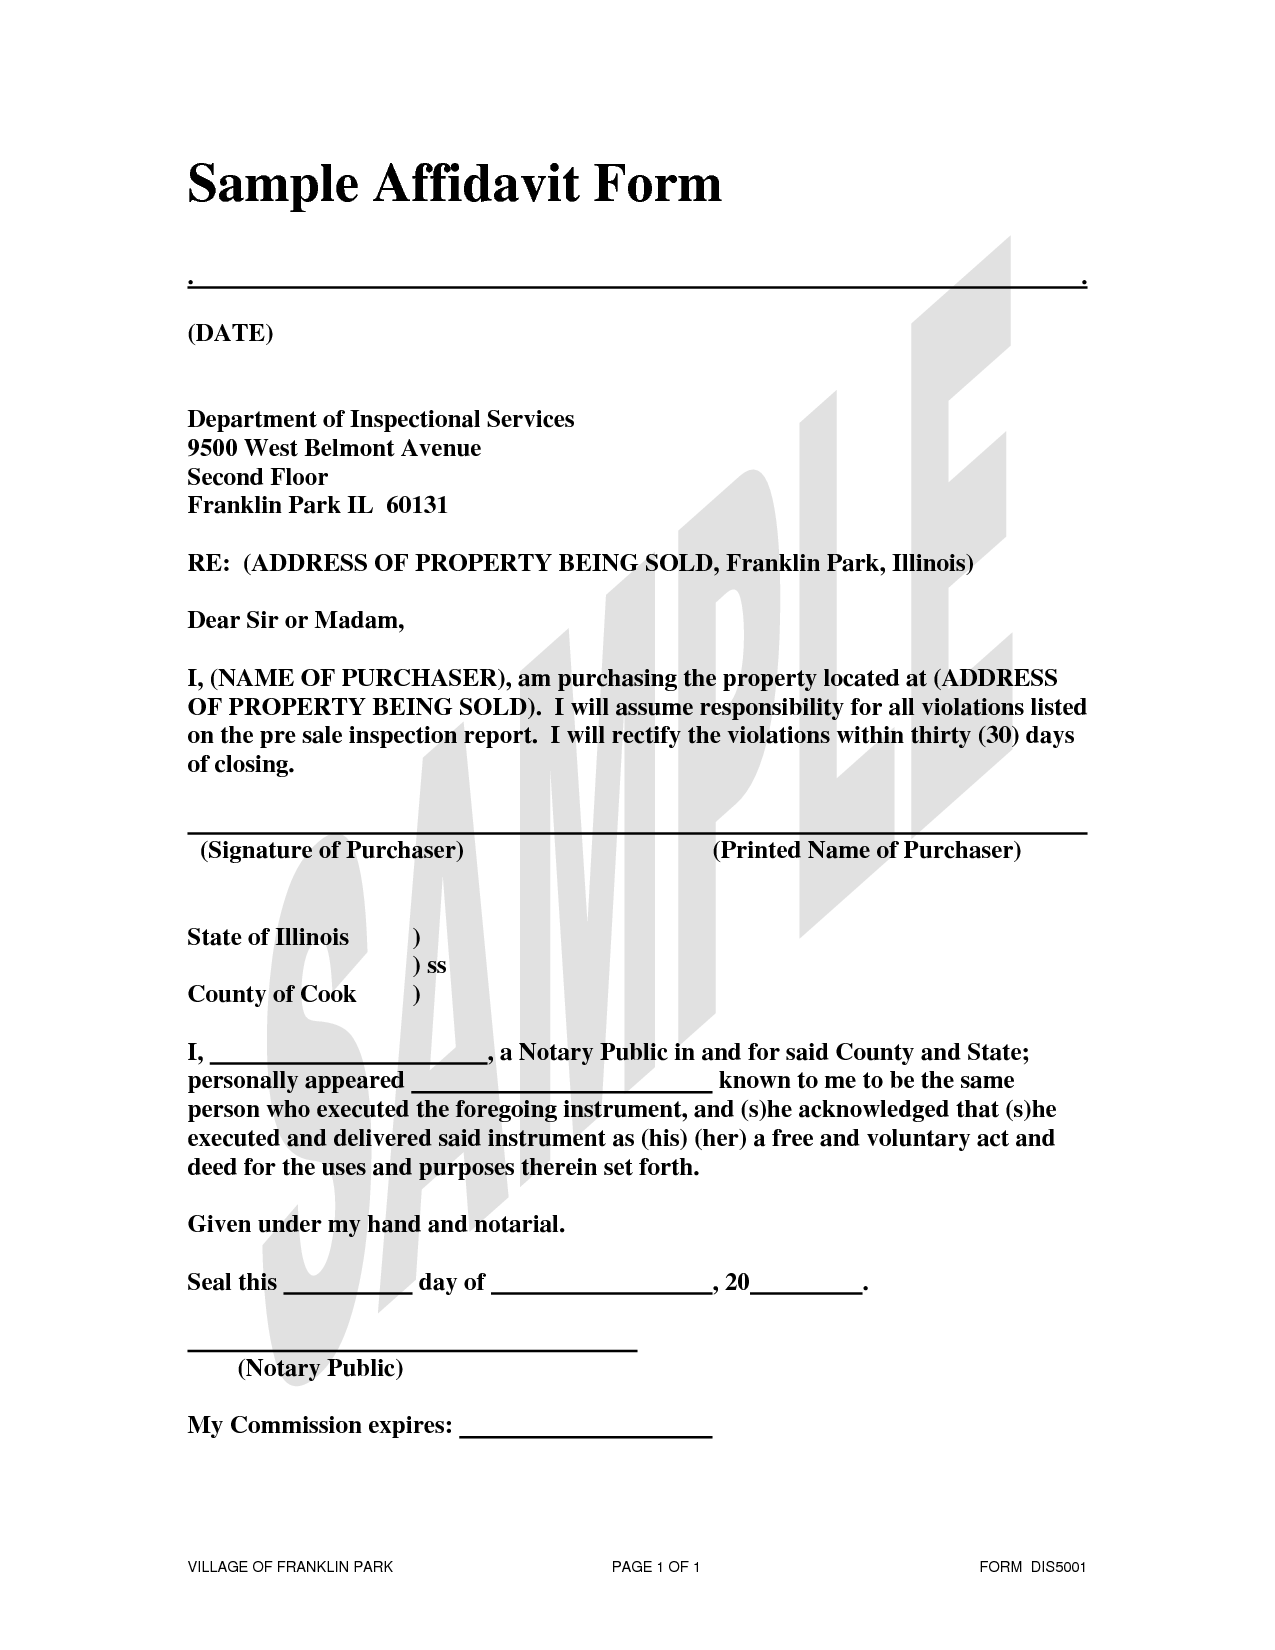 Affidavit Form Free Printable Documents